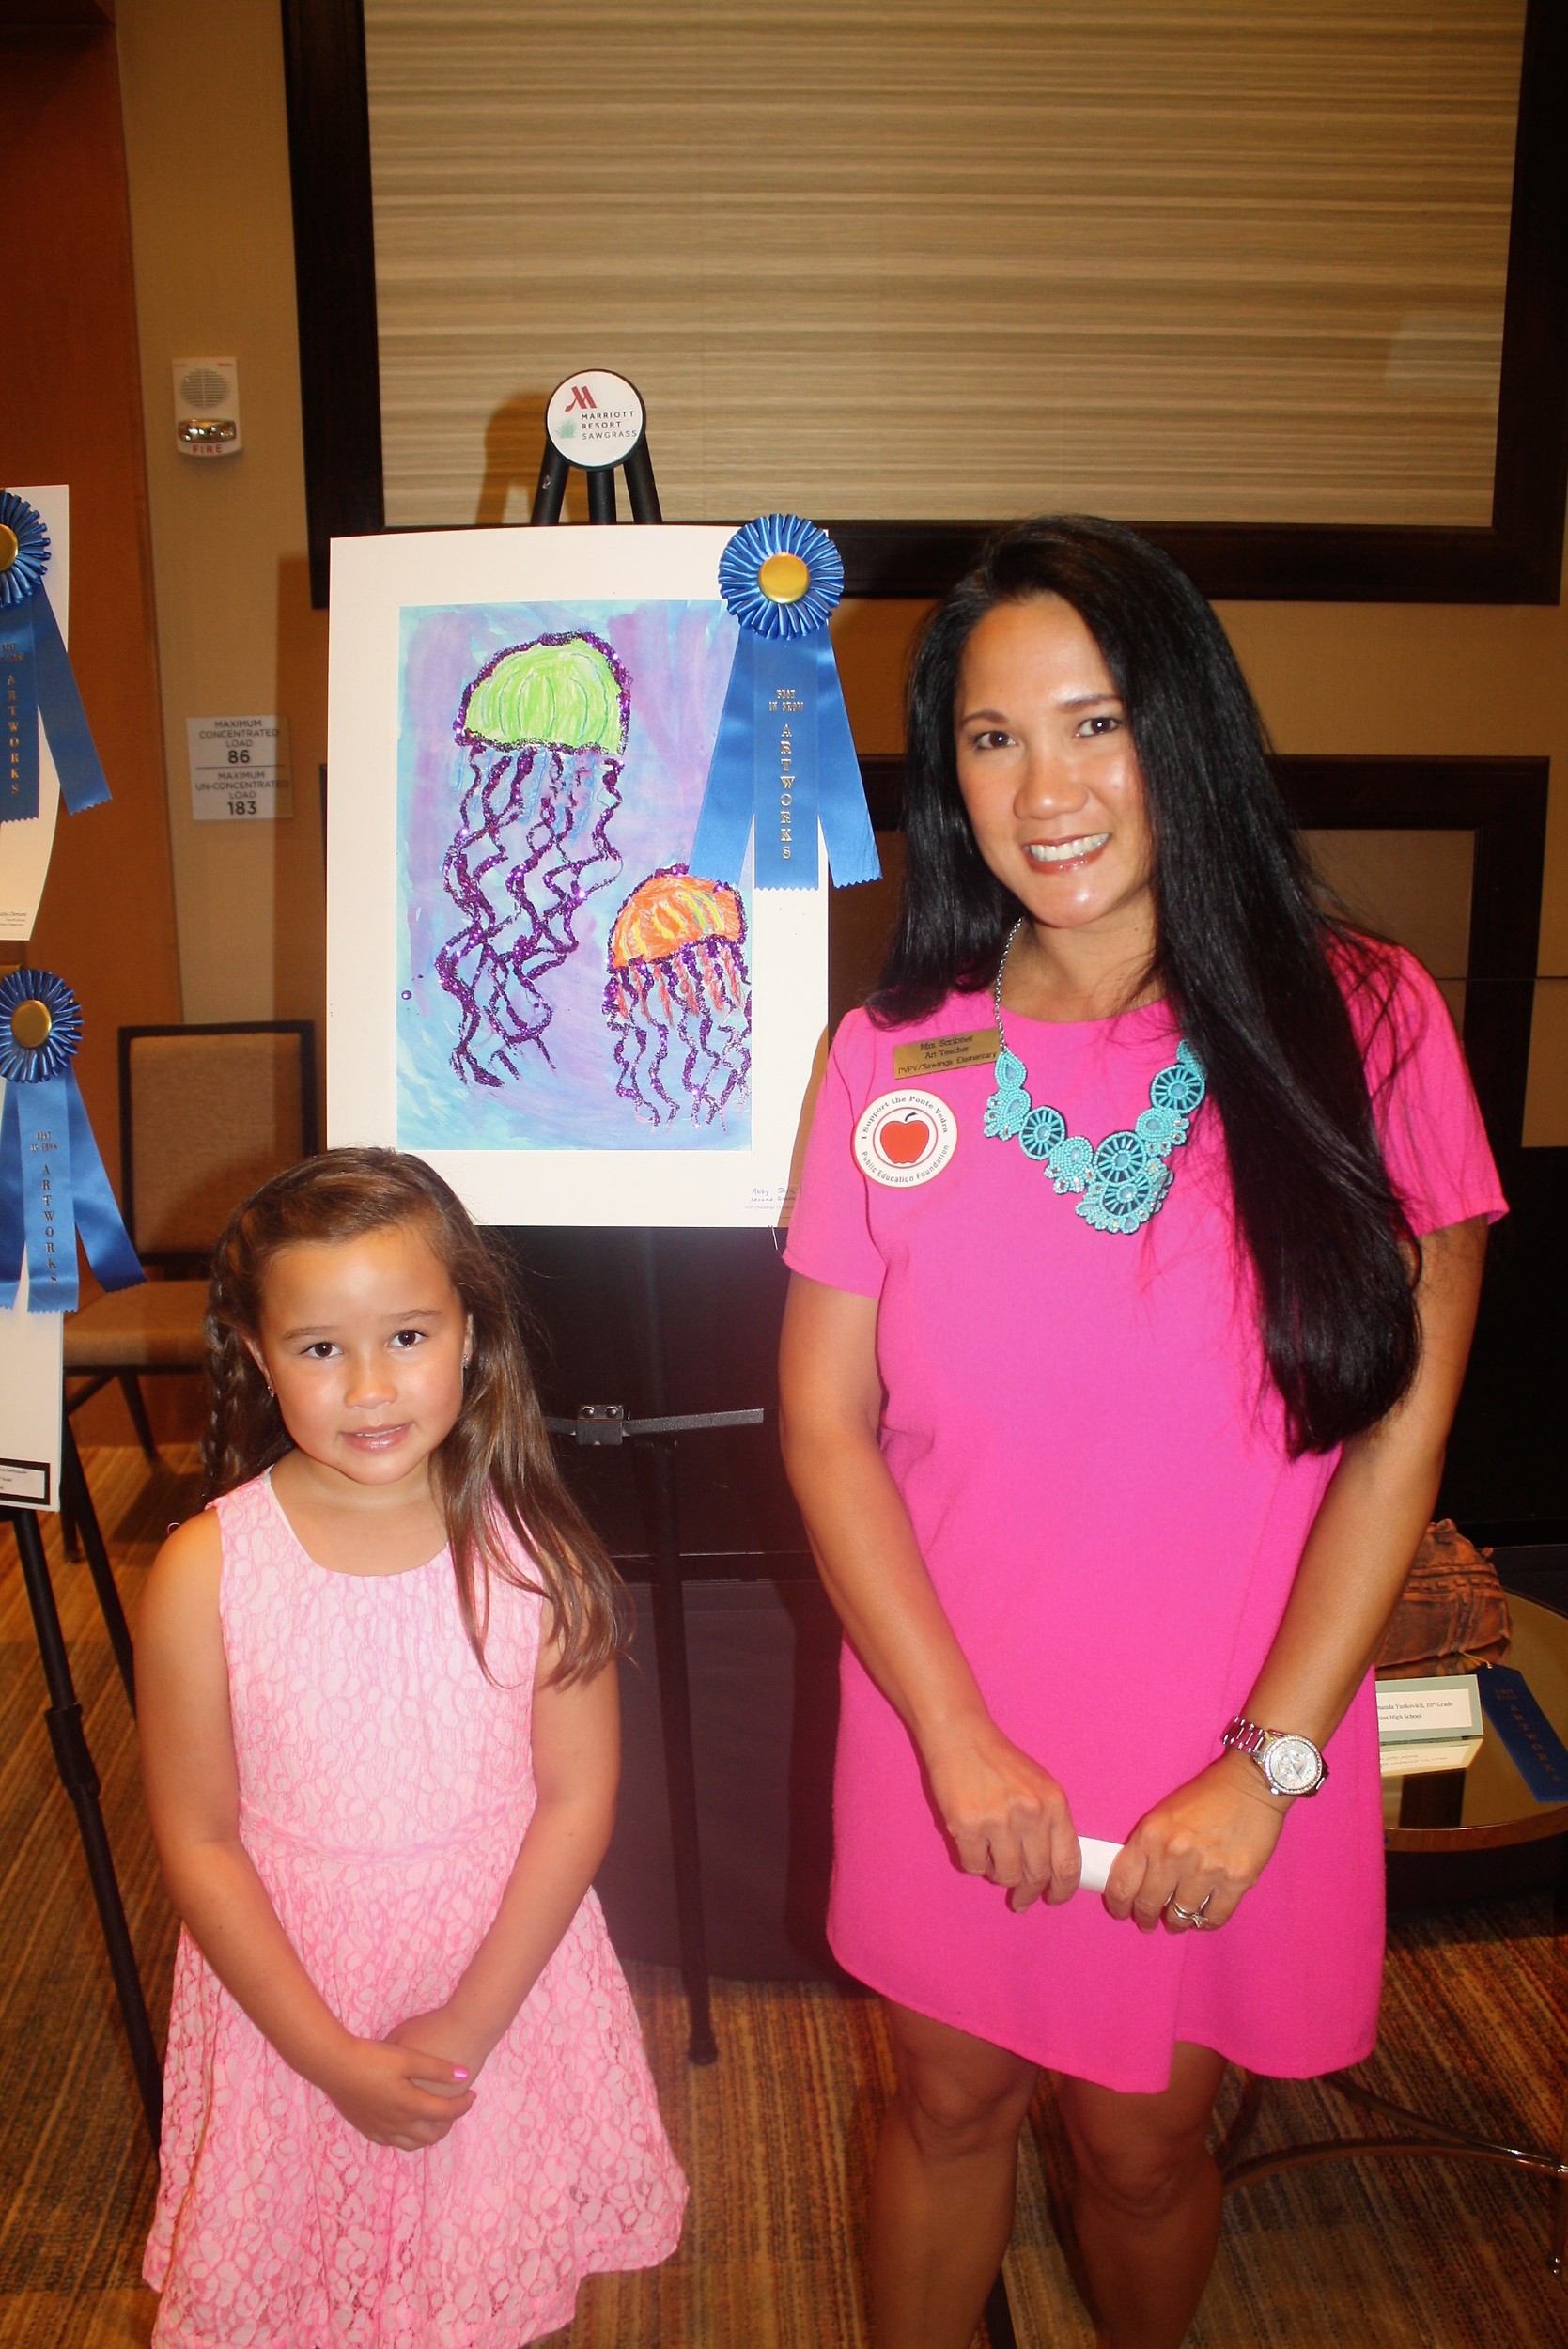 PVPV Rawlings second grade student Abby Shin displays her artwork with art teacher Kimberly Scribner